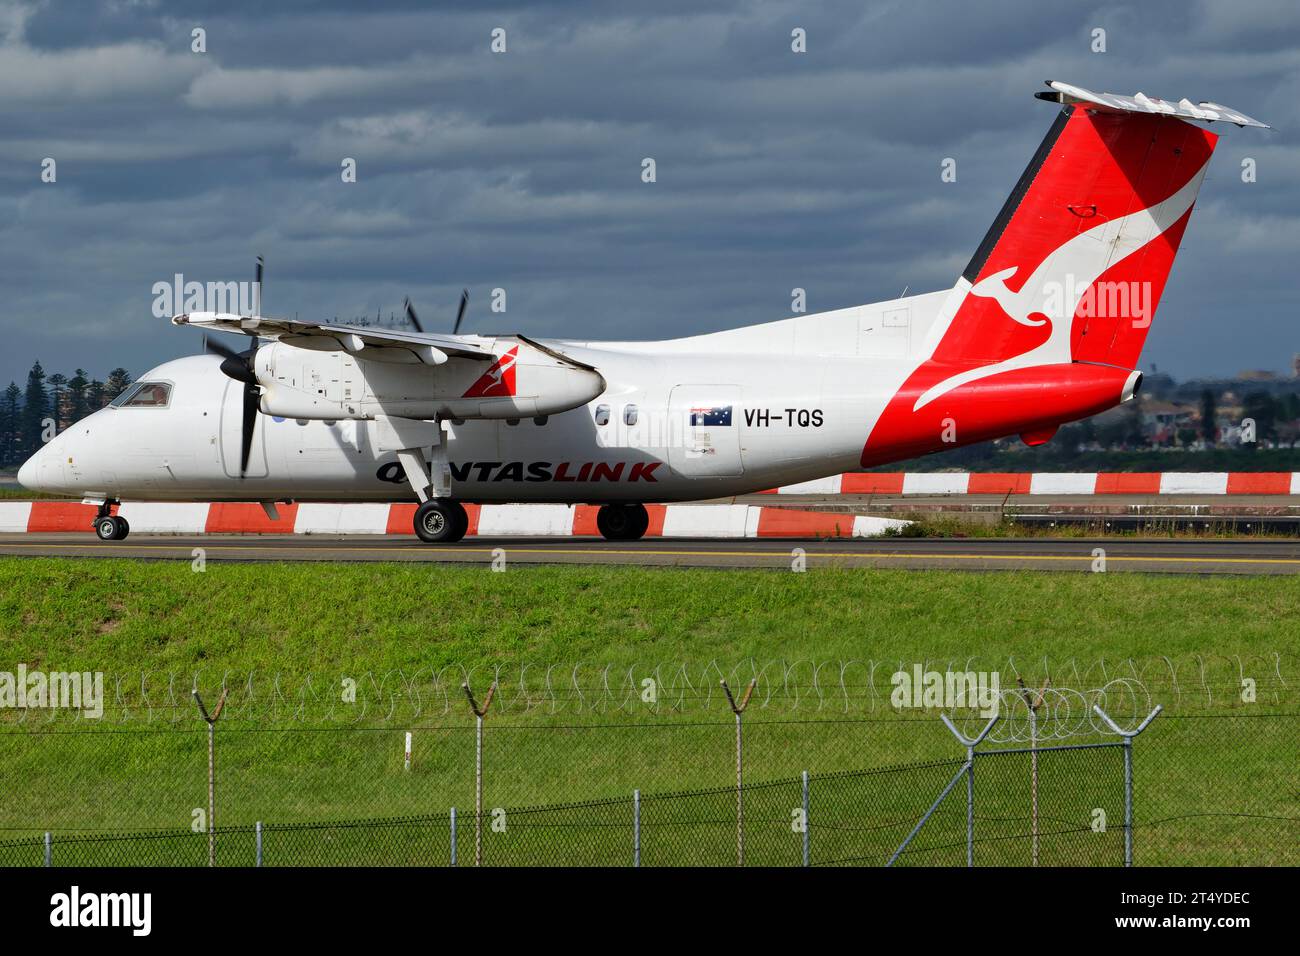 QantasLink De Havilland Canada Dash 8-200 seen taxiing at Sydney Airport. Stock Photo